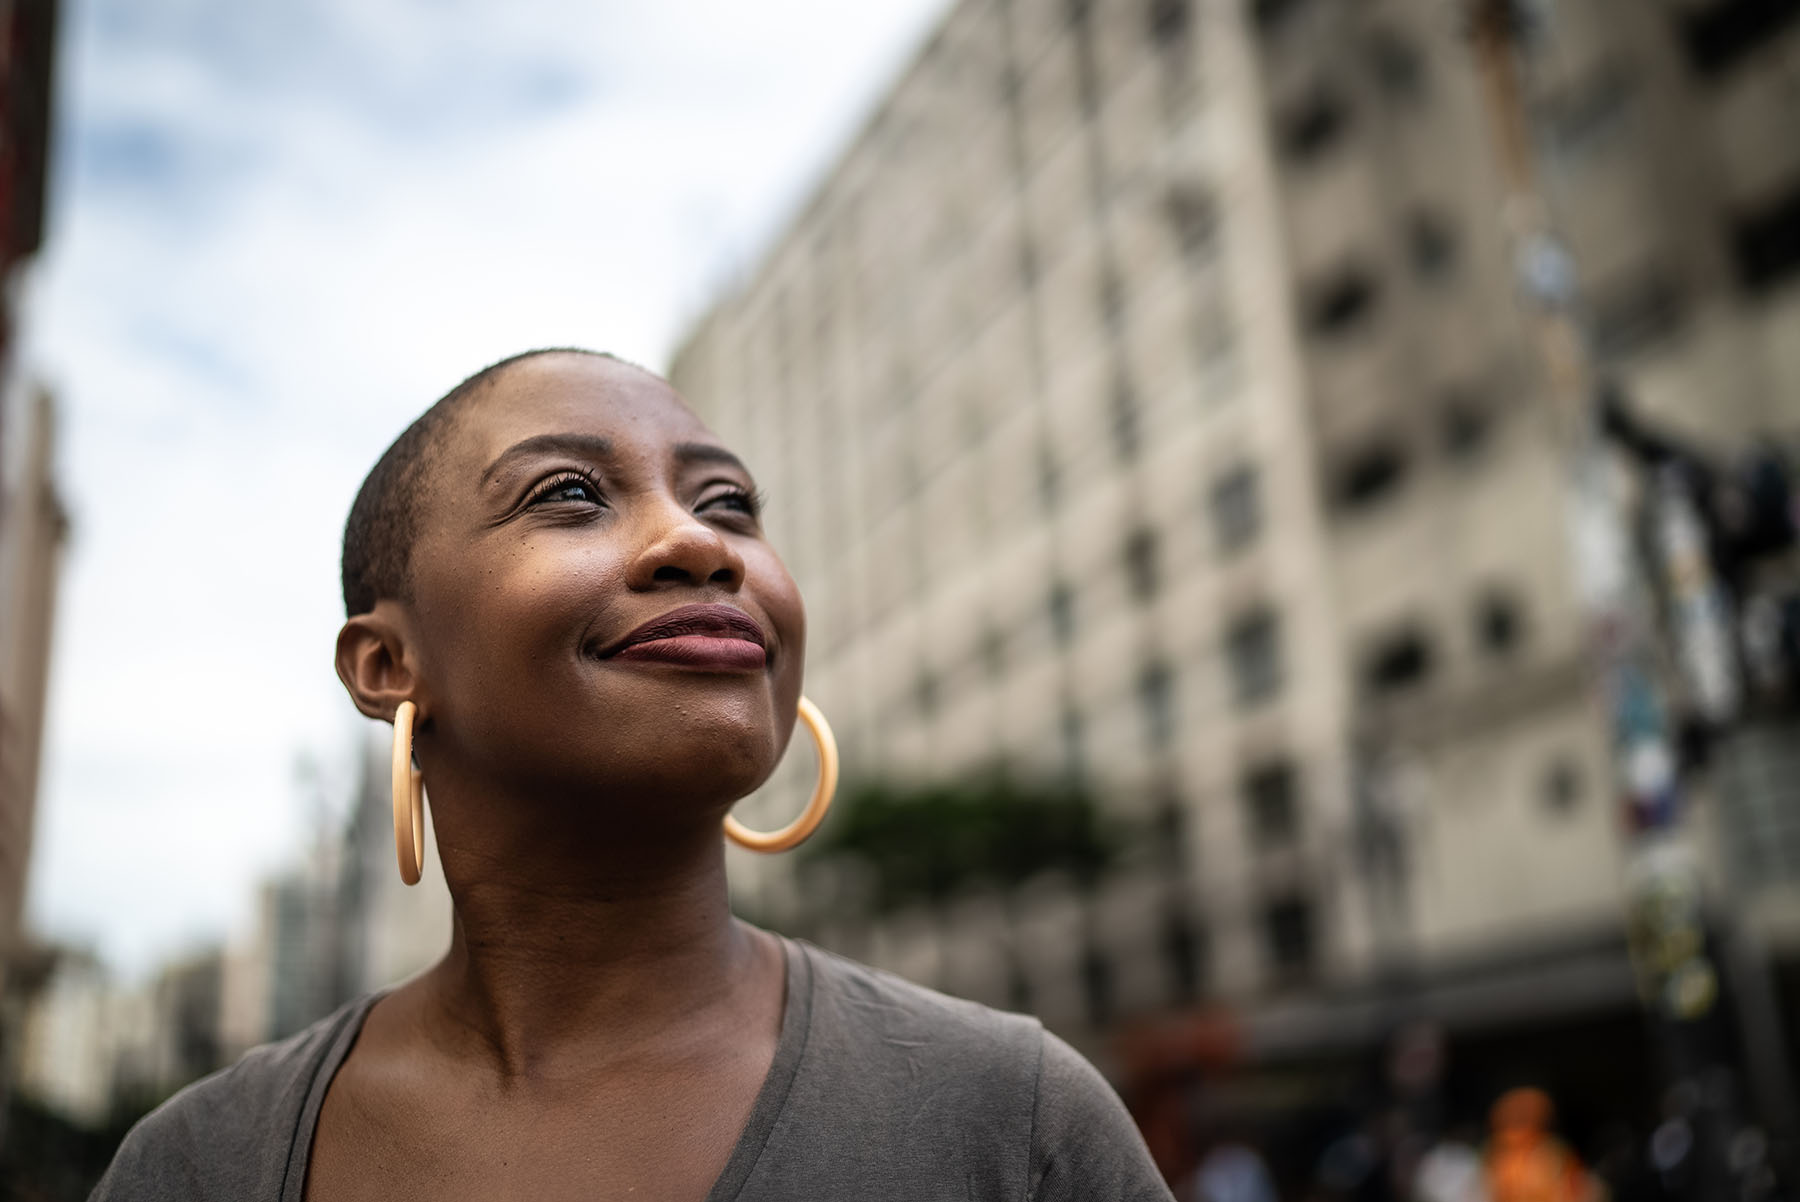 Pretty Black woman standing on city street, smiles.